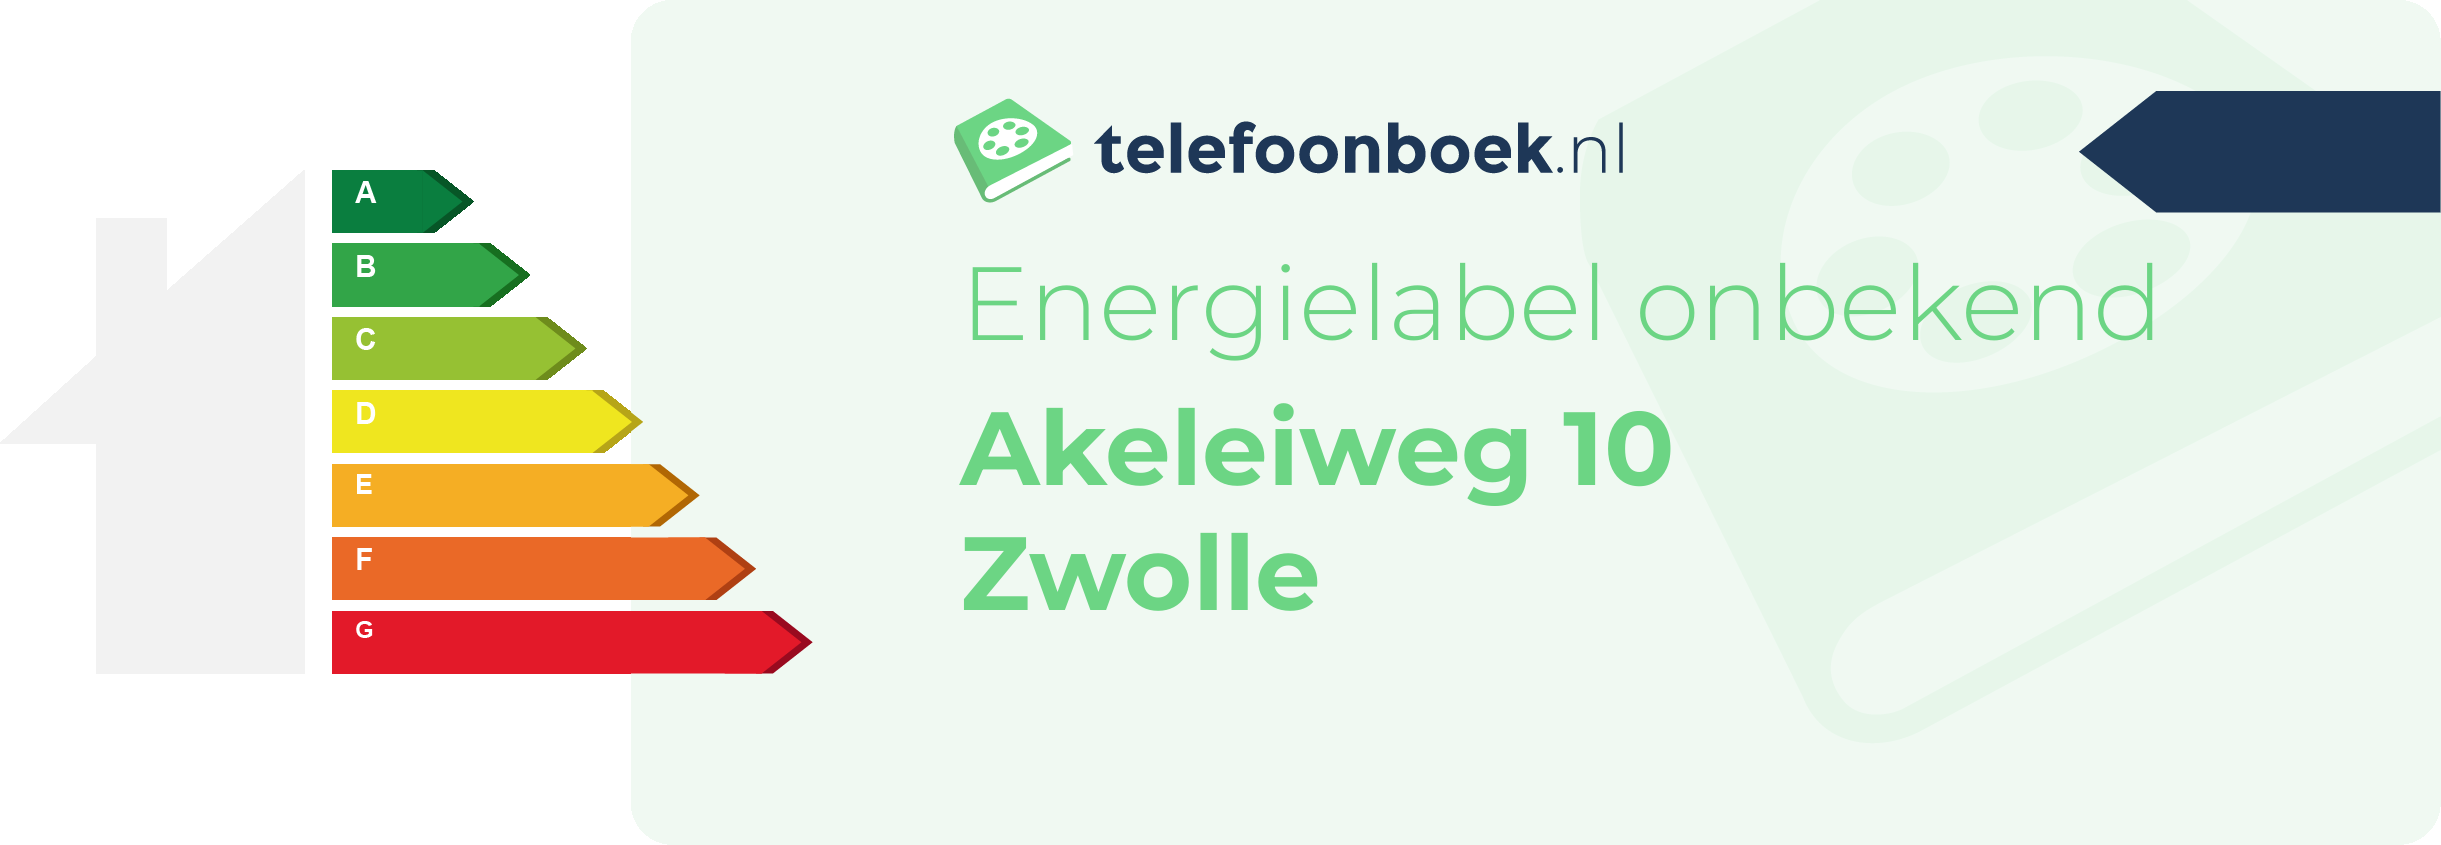 Energielabel Akeleiweg 10 Zwolle